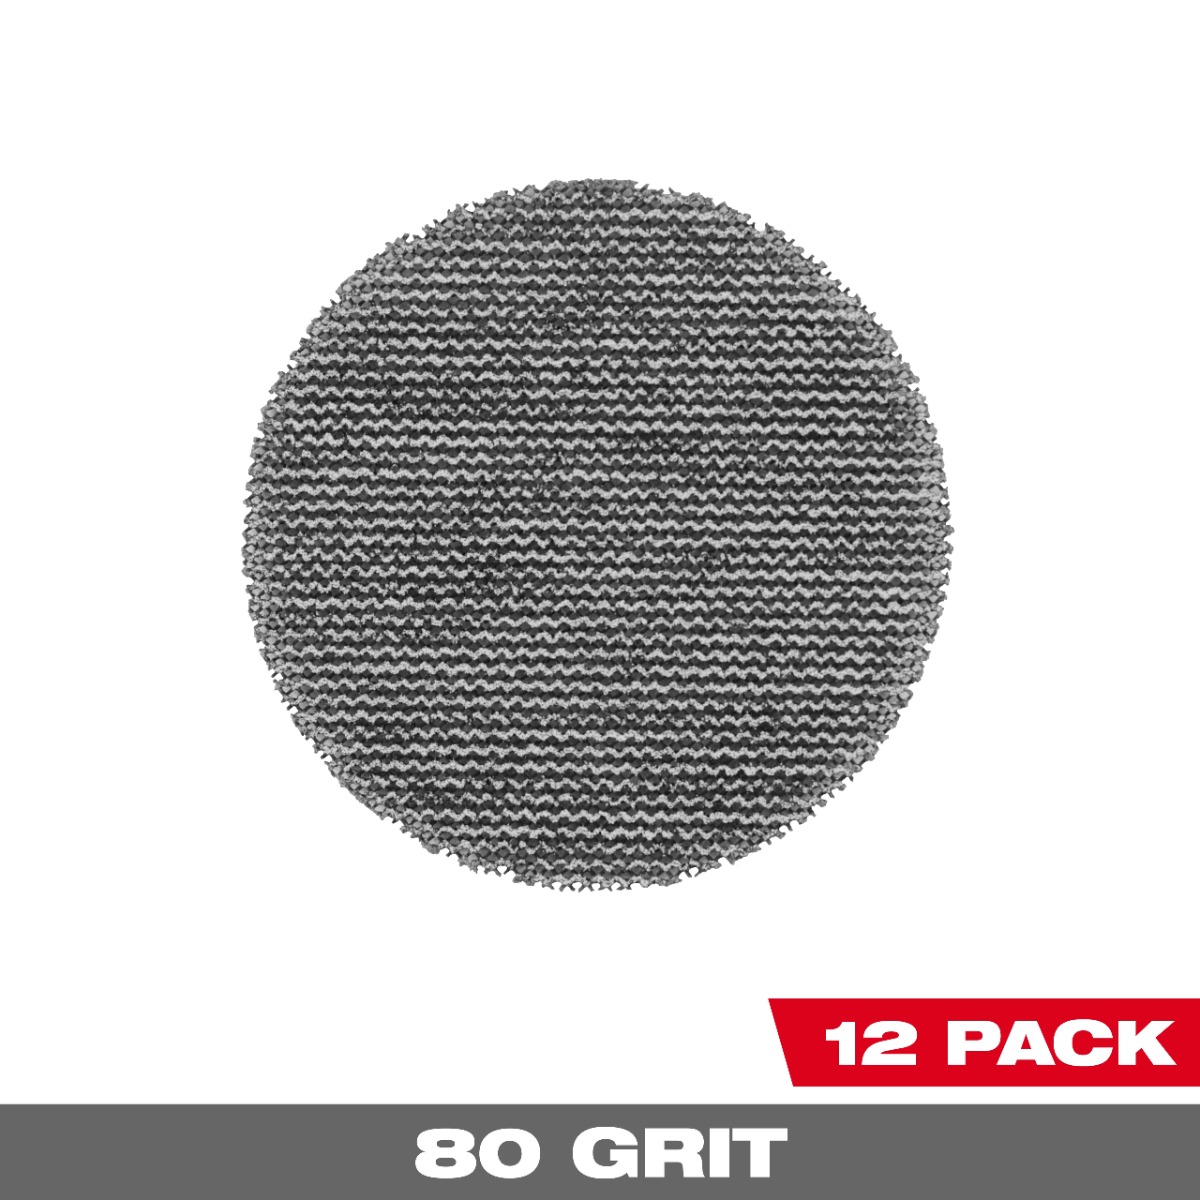 3” 80 Grit Mesh Sanding Discs with POWERGRID™ Tear Resistant Mesh – 12 pk + Pad Saver